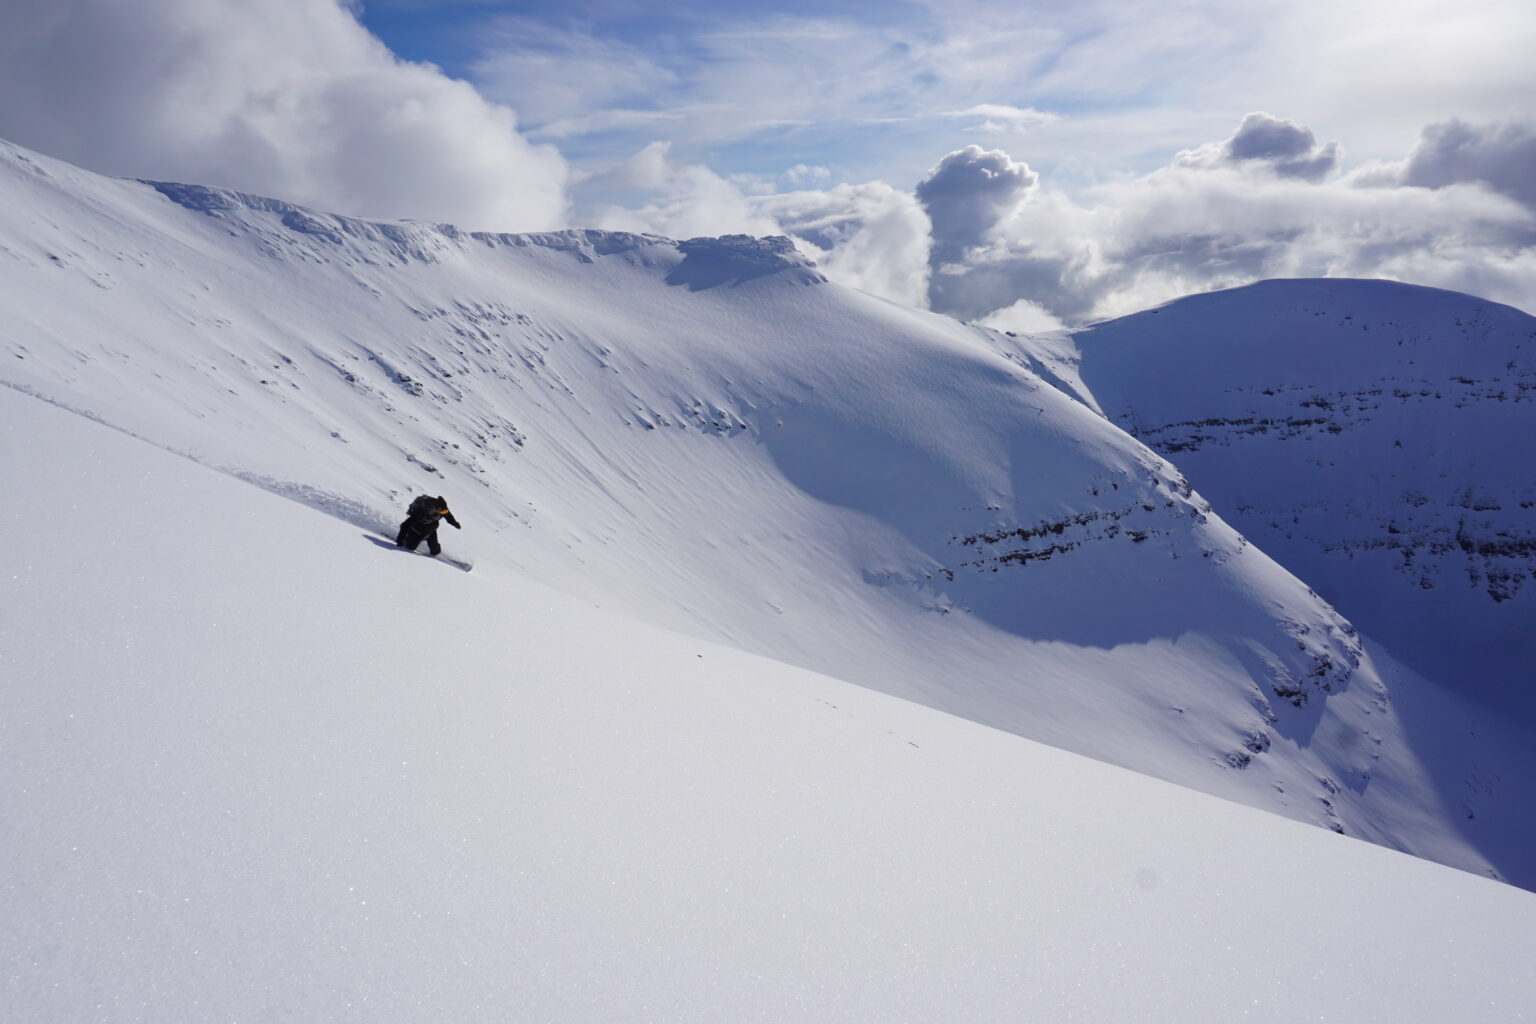 Snowboarding down Midteraksia in powder conditions